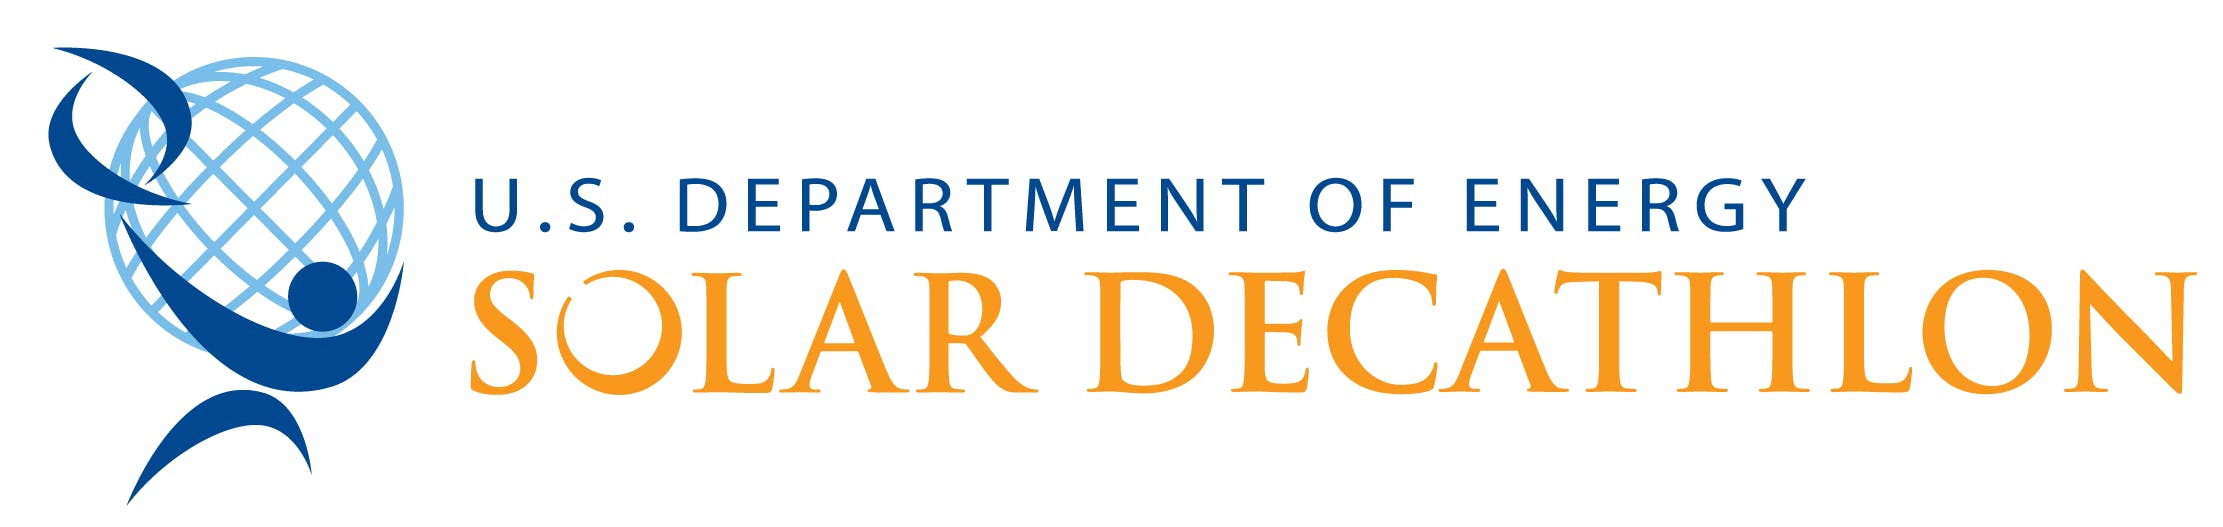 U.S. Department of Energy’s Solar Decathlon